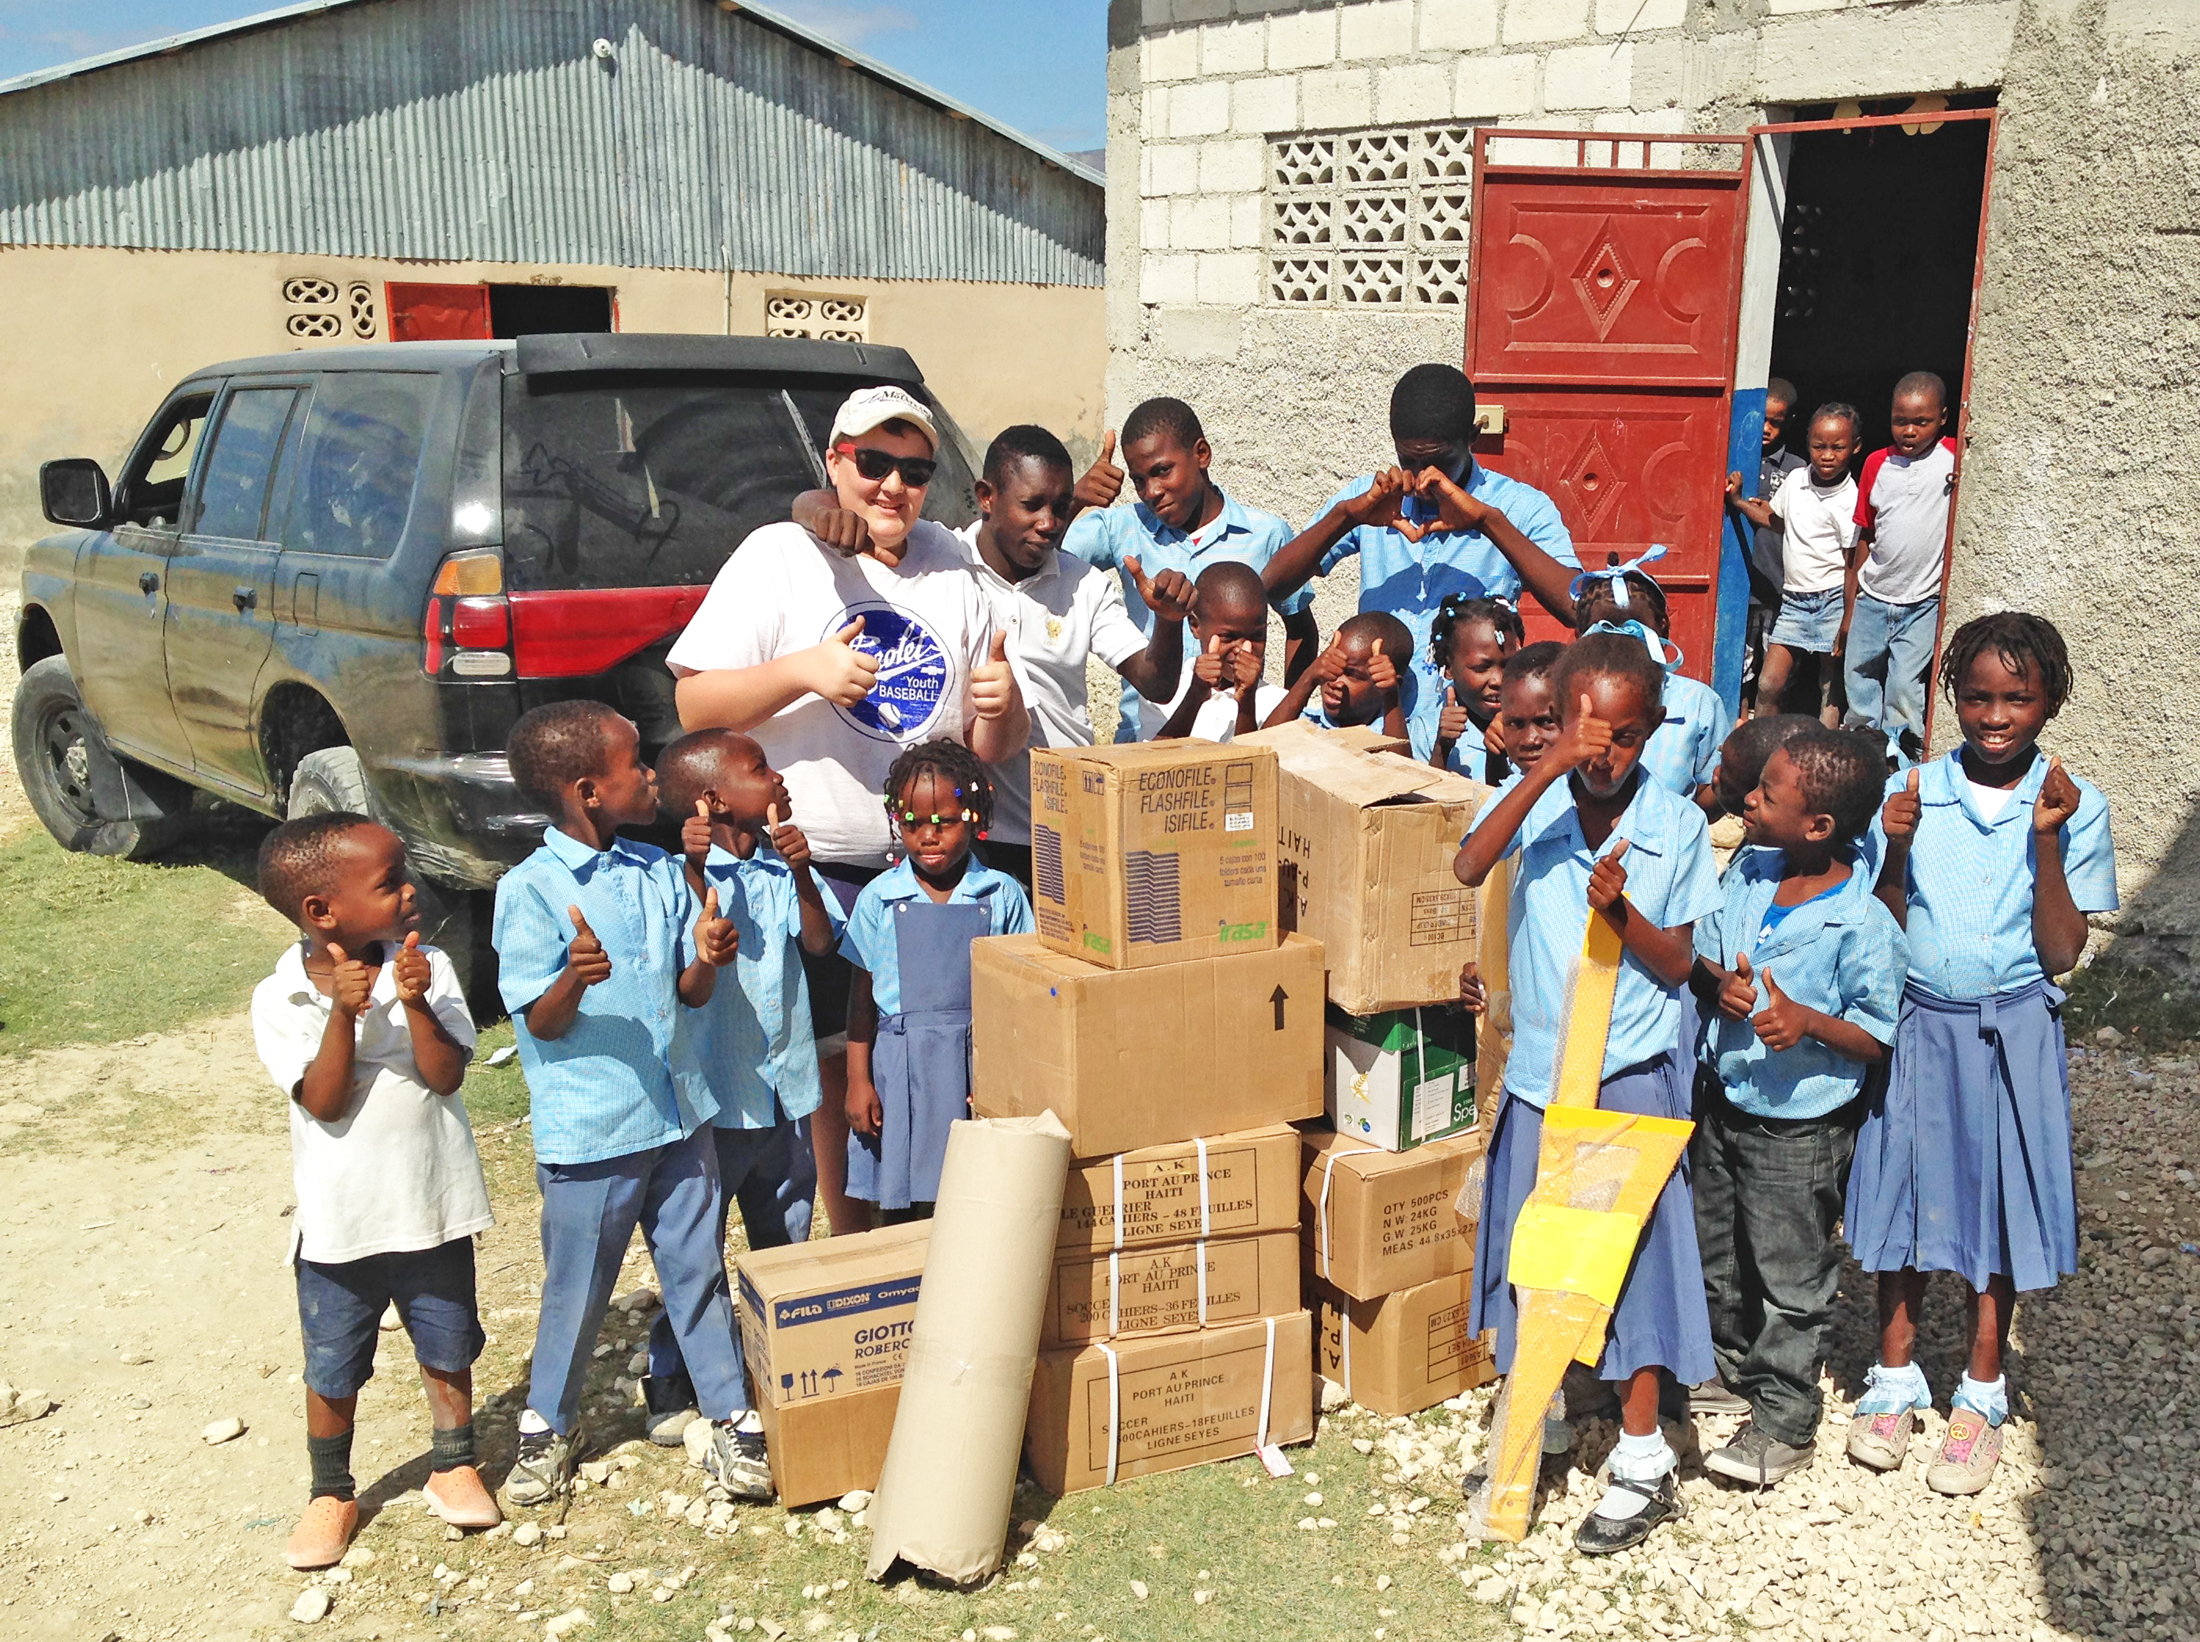 Student raises $2,000 for school supplies in Haiti